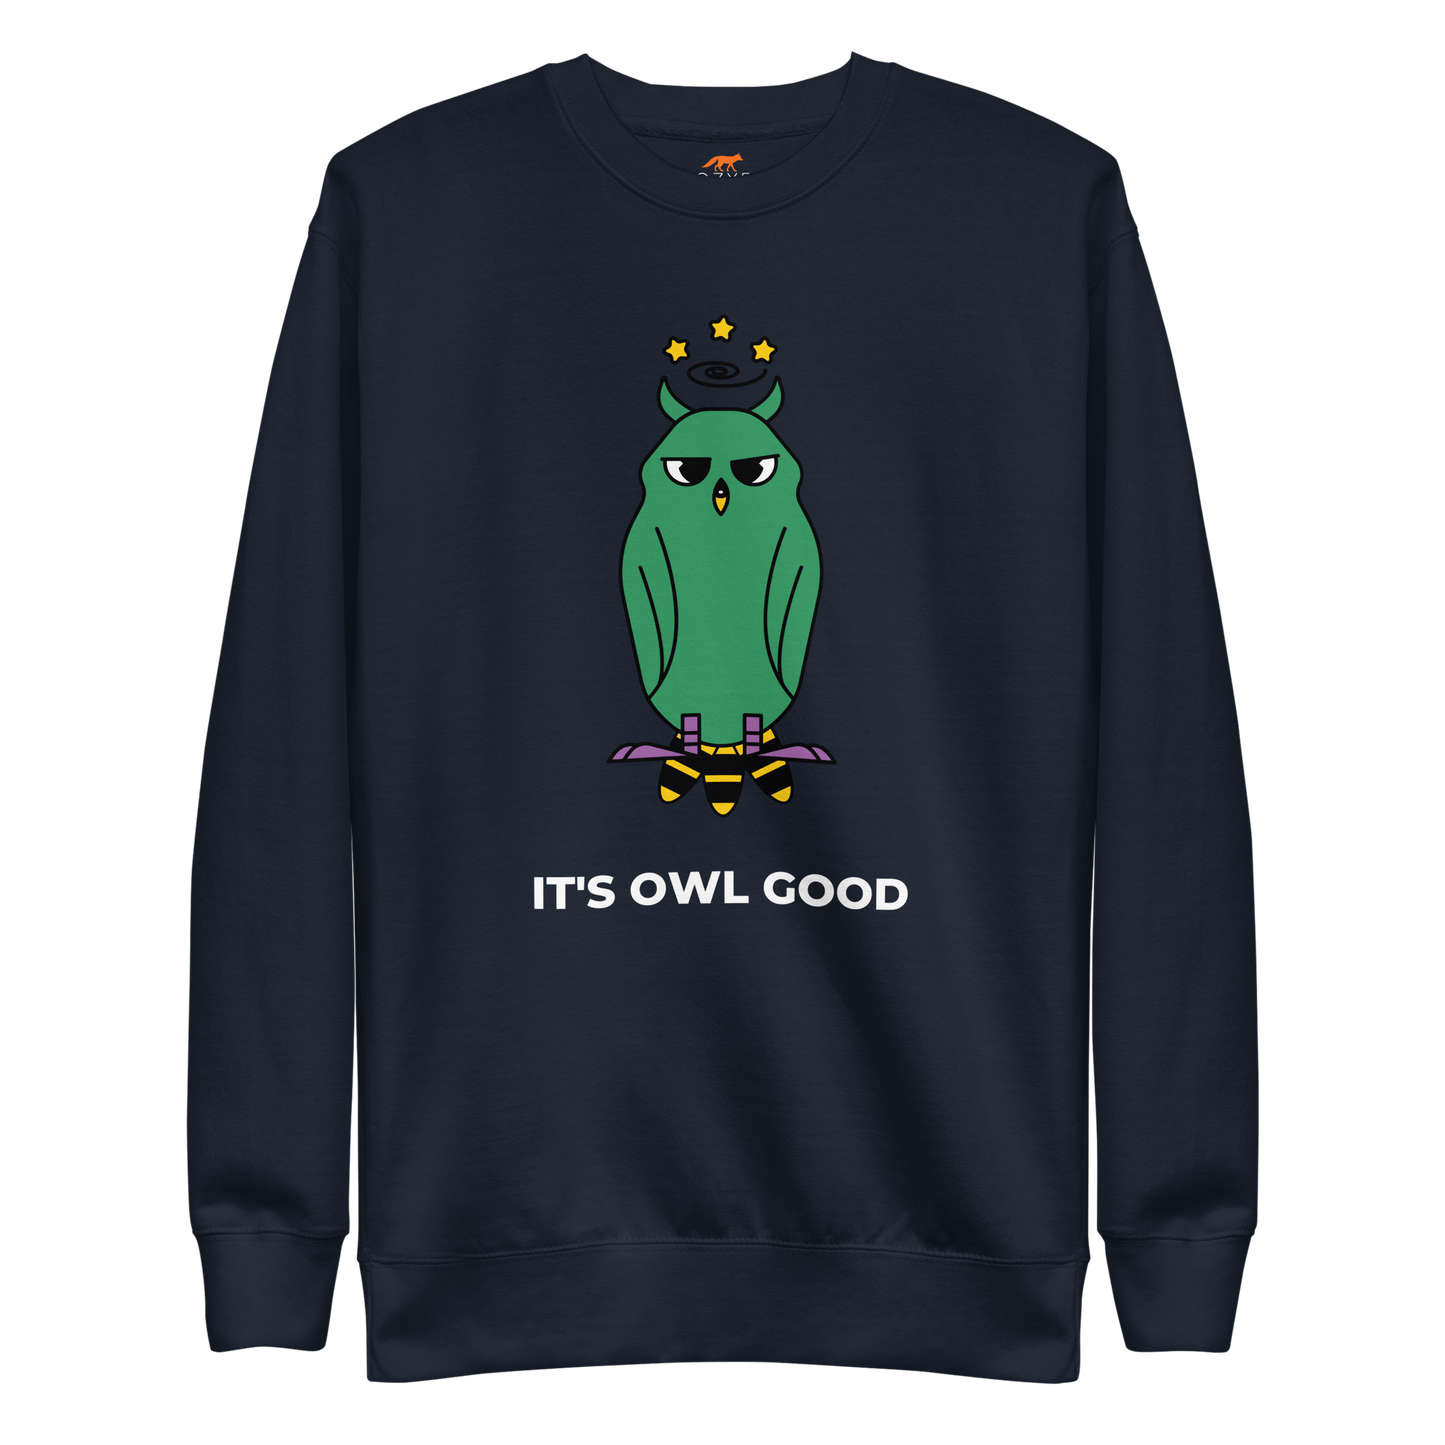 Navy Blazer Premium Owl Sweatshirt featuring a hootin' cool It's Owl Good graphic on the chest - Funny Graphic Owl Sweatshirts - Boozy Fox